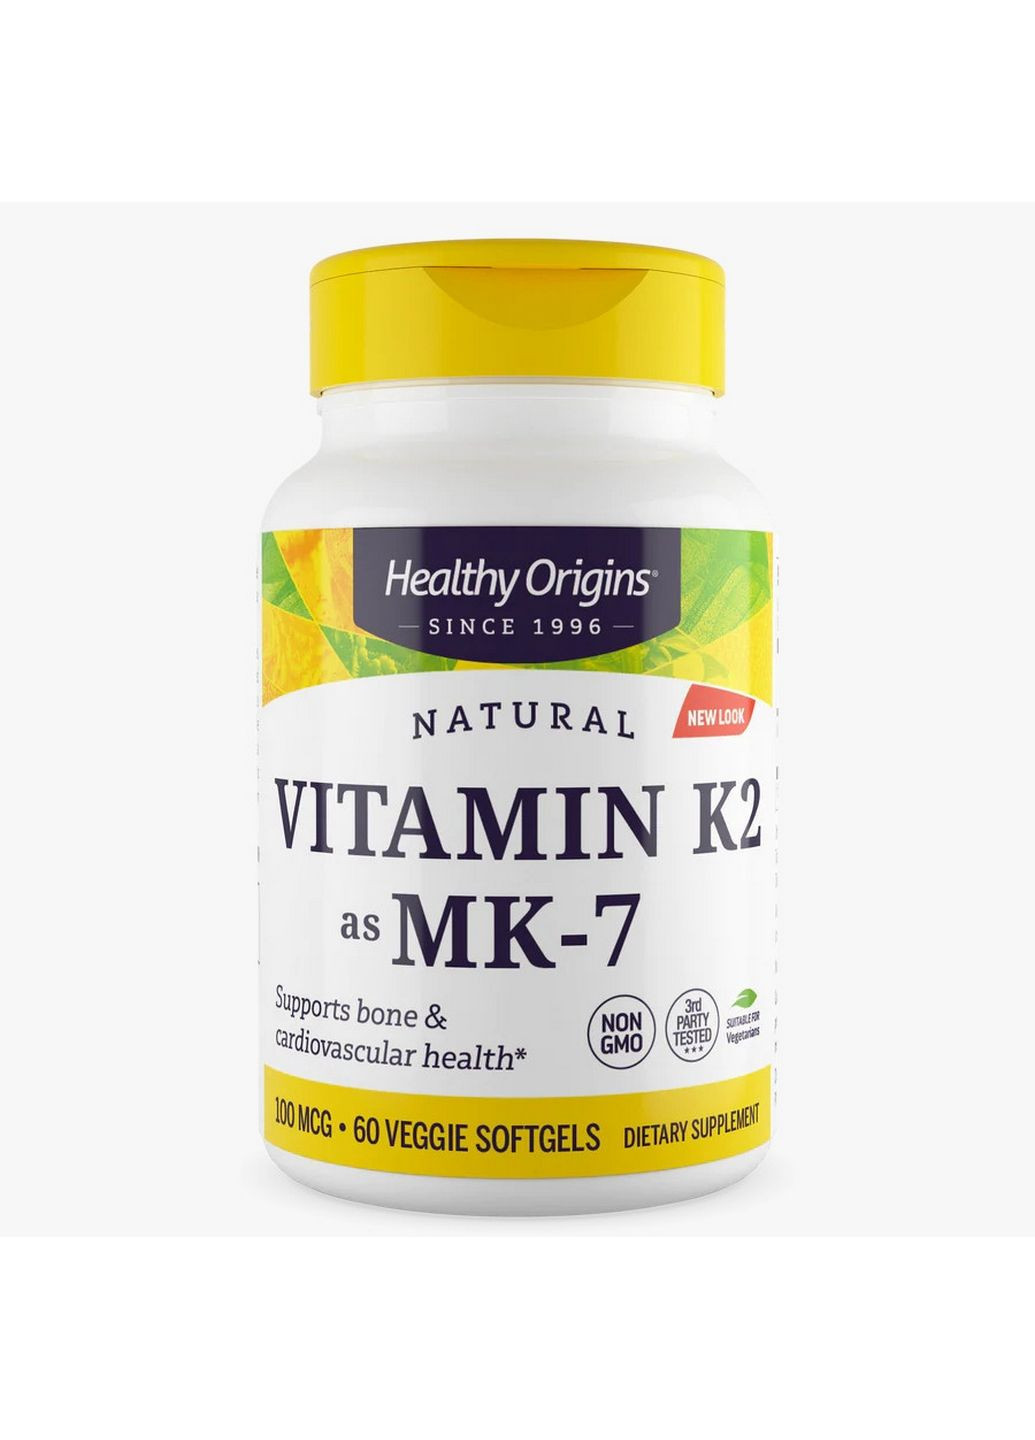 Витамины и минералы Vitamin K2 as MK-7 Natural 100 mcg, 60 вегакапсул Healthy Origins (293482069)